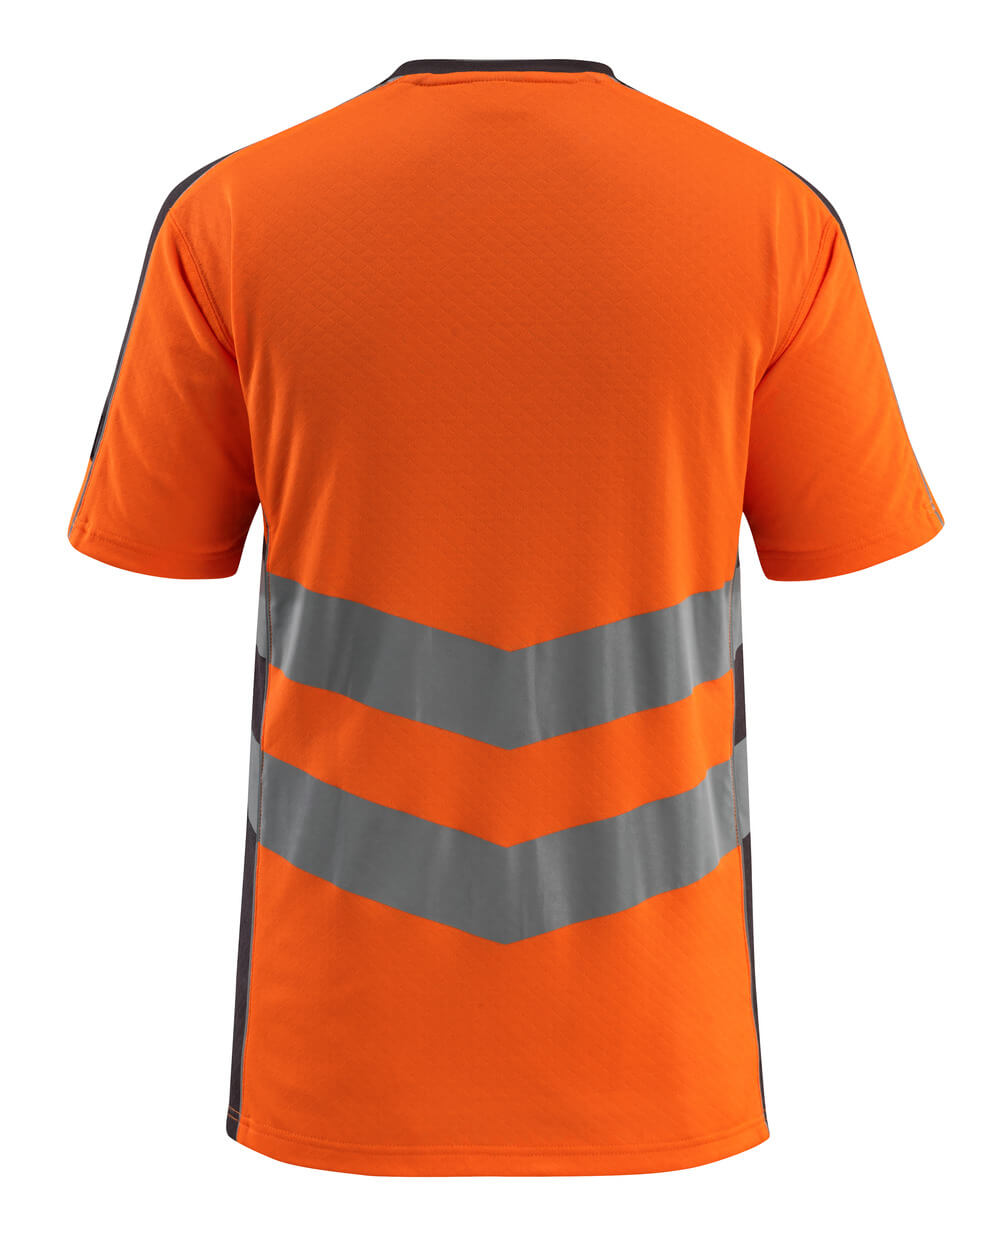 Mascot SAFE SUPREME  Sandwell T-shirt 50127 hi-vis orange/dark anthracite